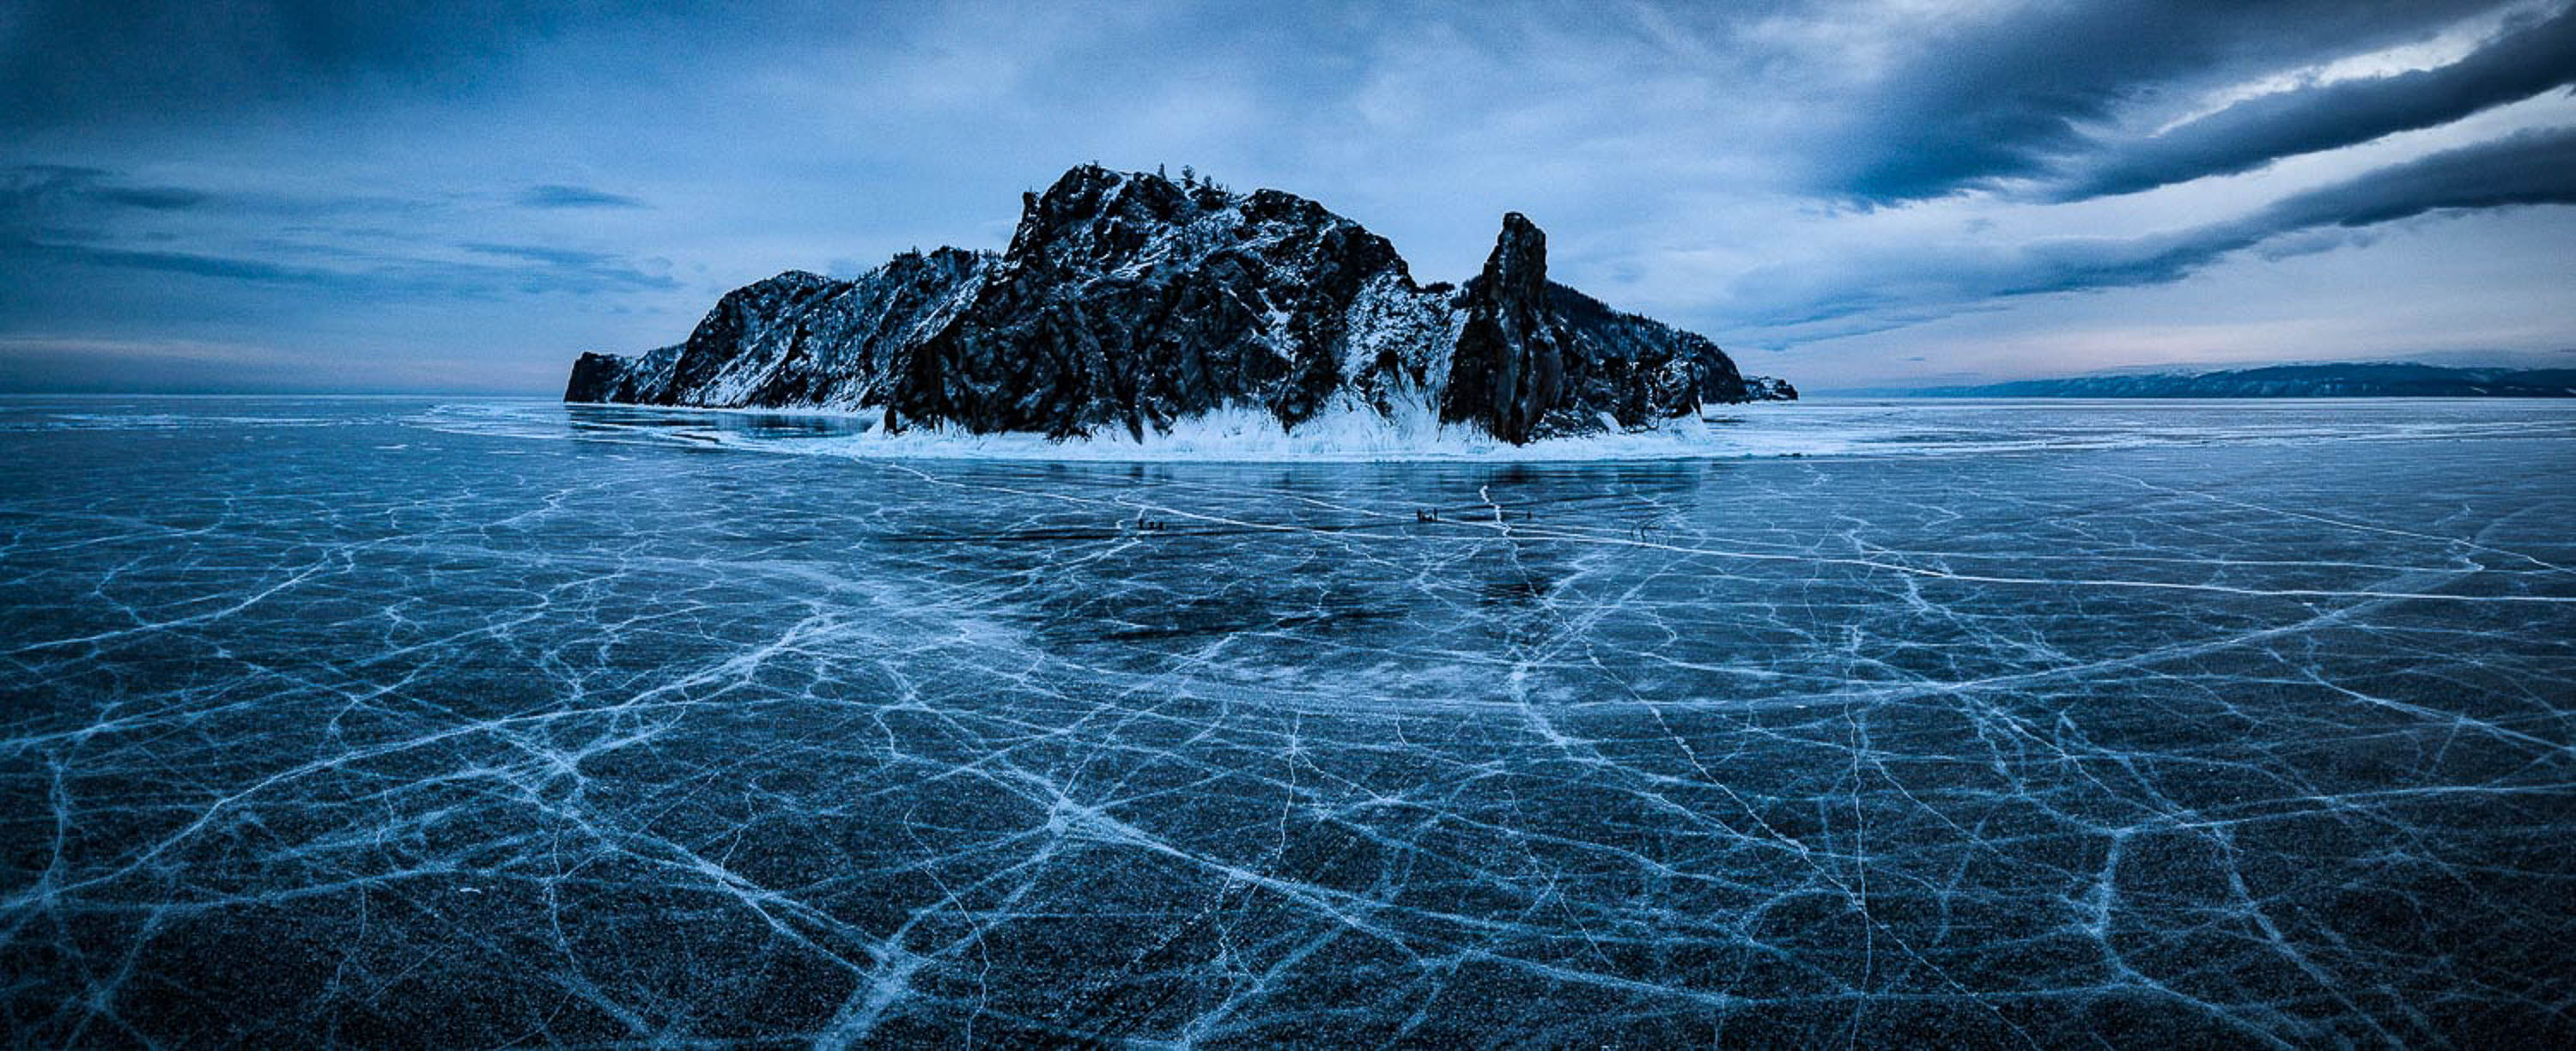 A frozen lake with a giant black mountain inside, Lake Baikal #48, Siberia, Russia